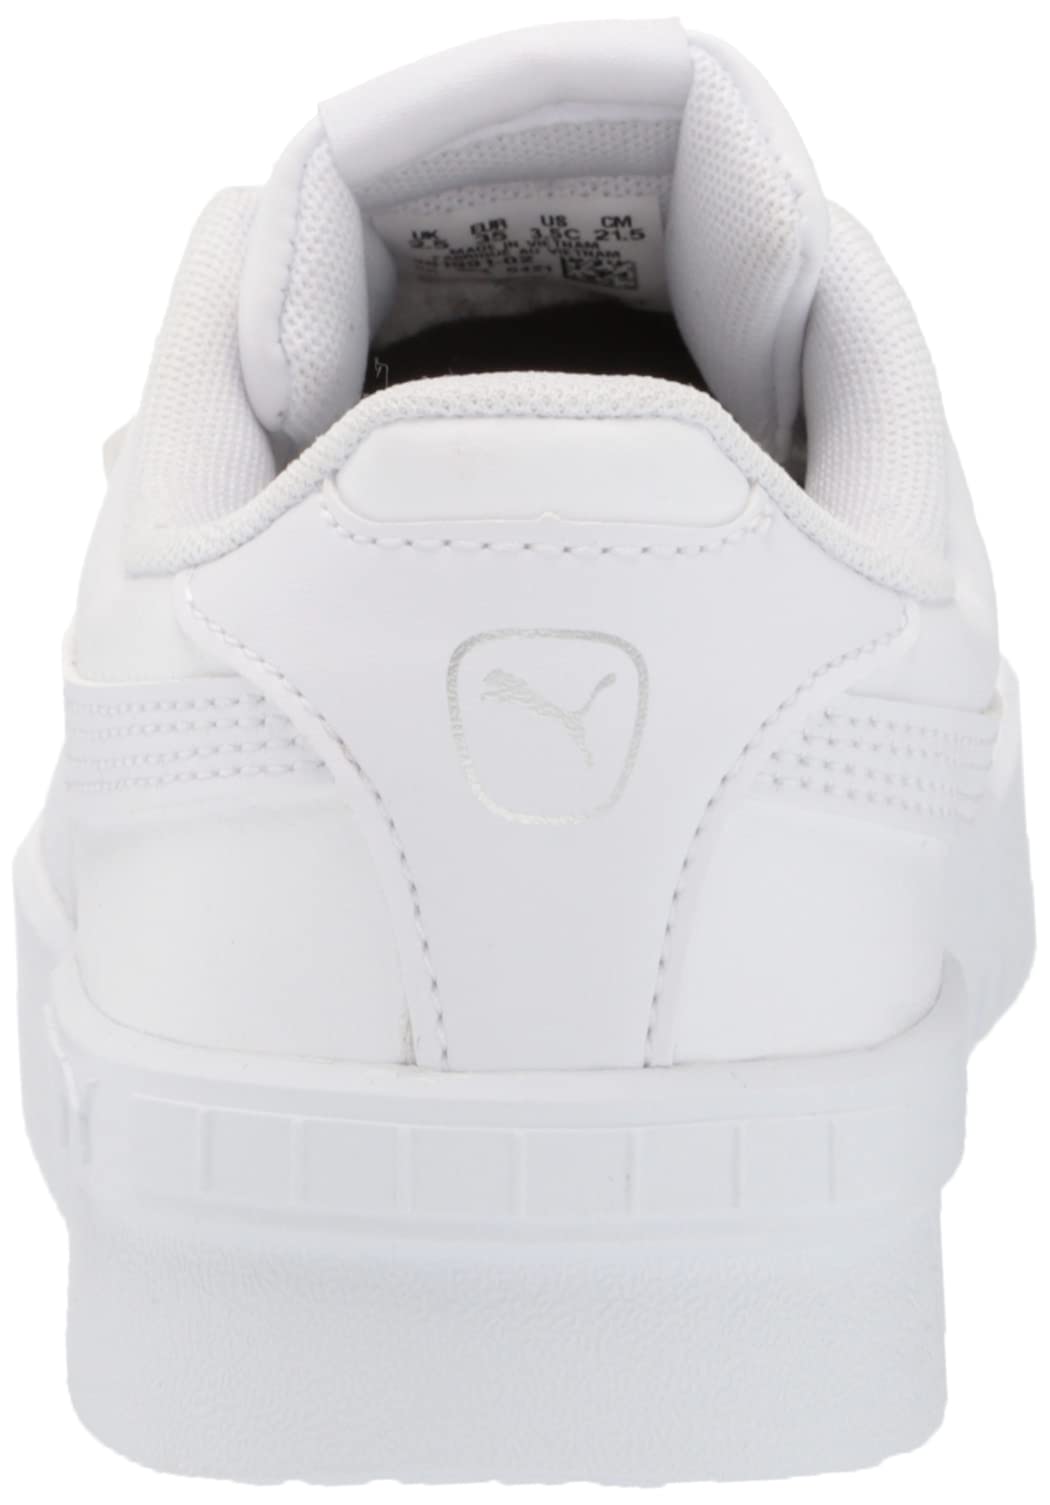 PUMA Unisex-Child Jada Sneaker